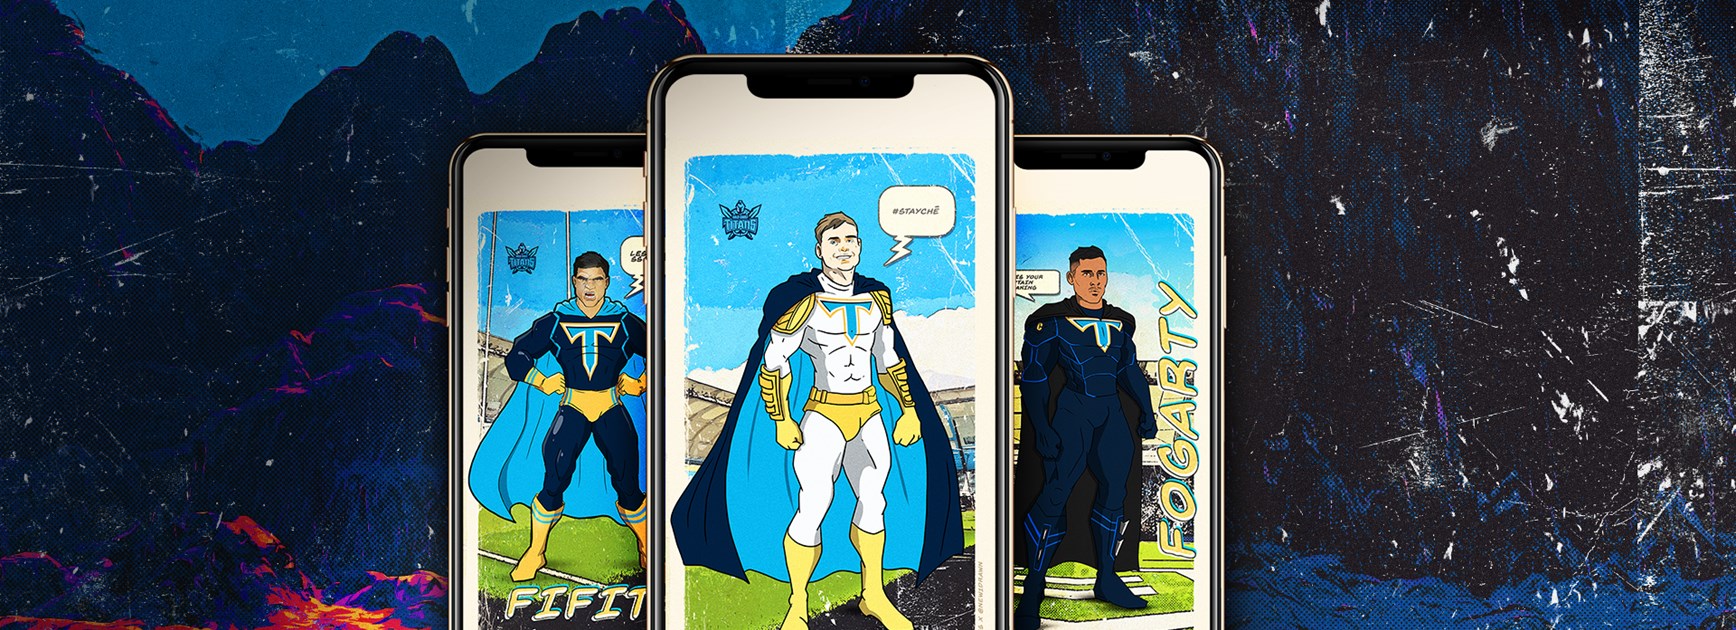 Wallpaper Wednesday: Titans Superheroes